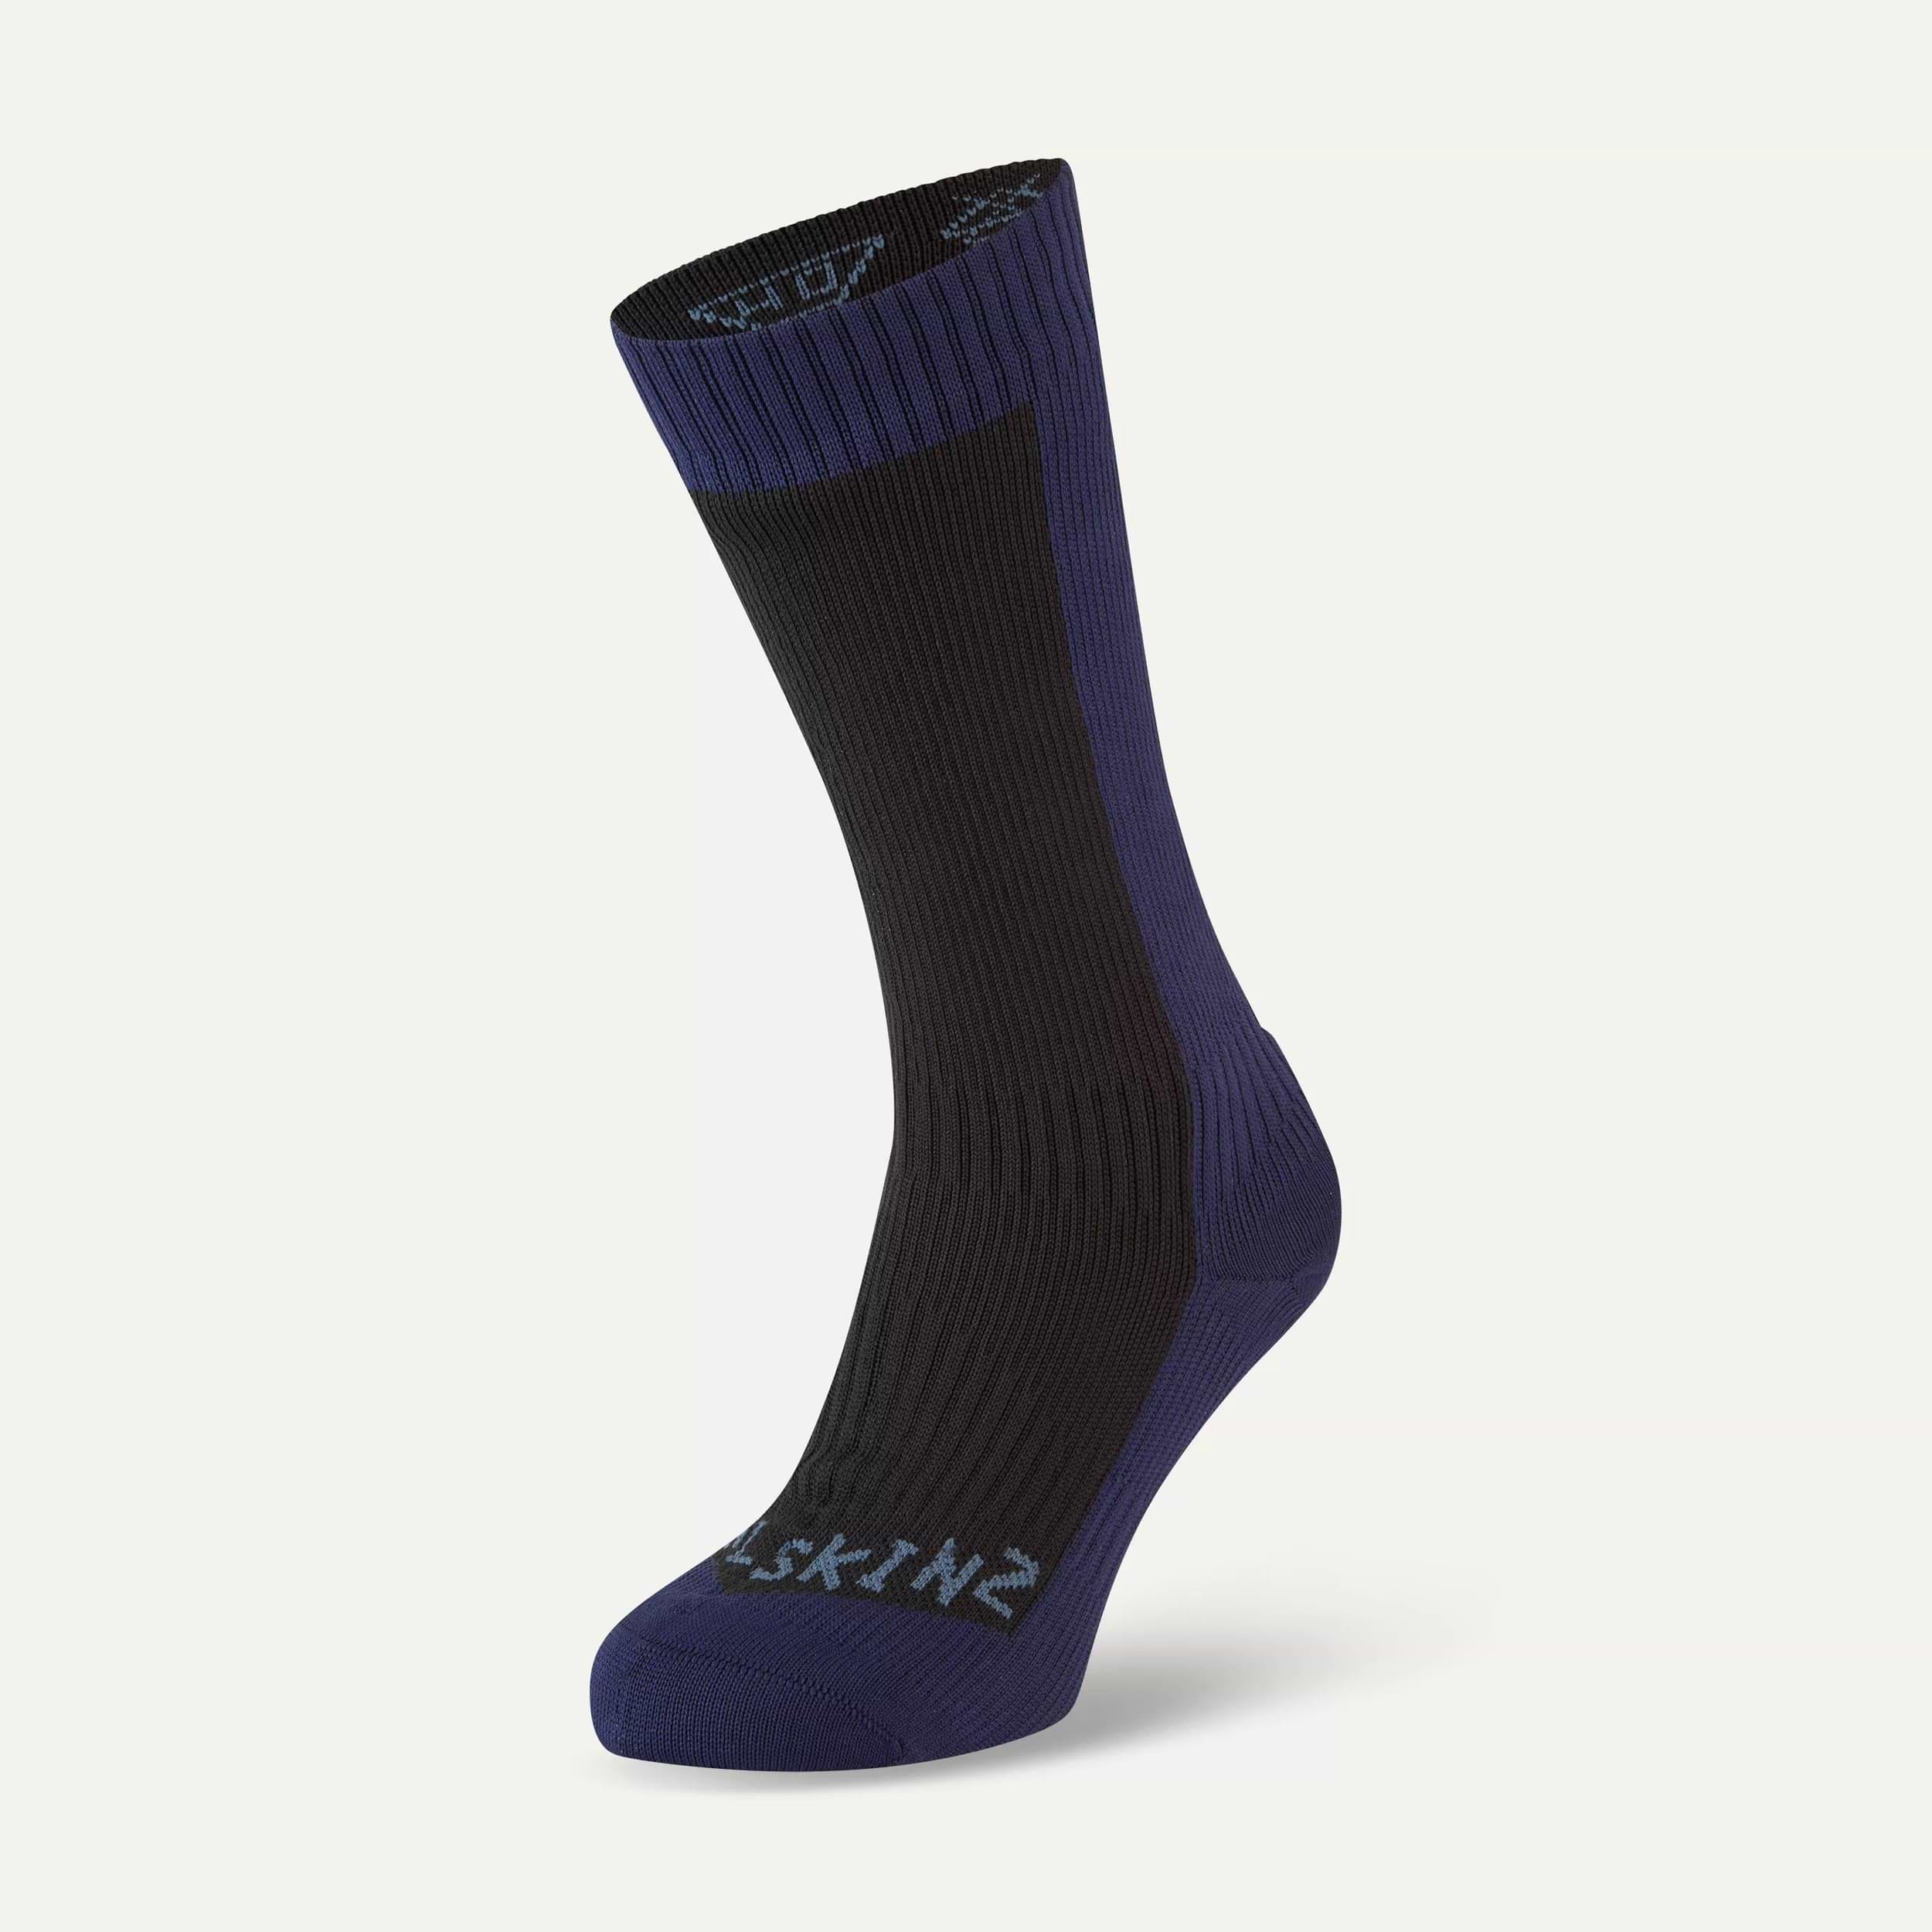 OTTERSHELL Waterproof socks For outdoor activities golf running